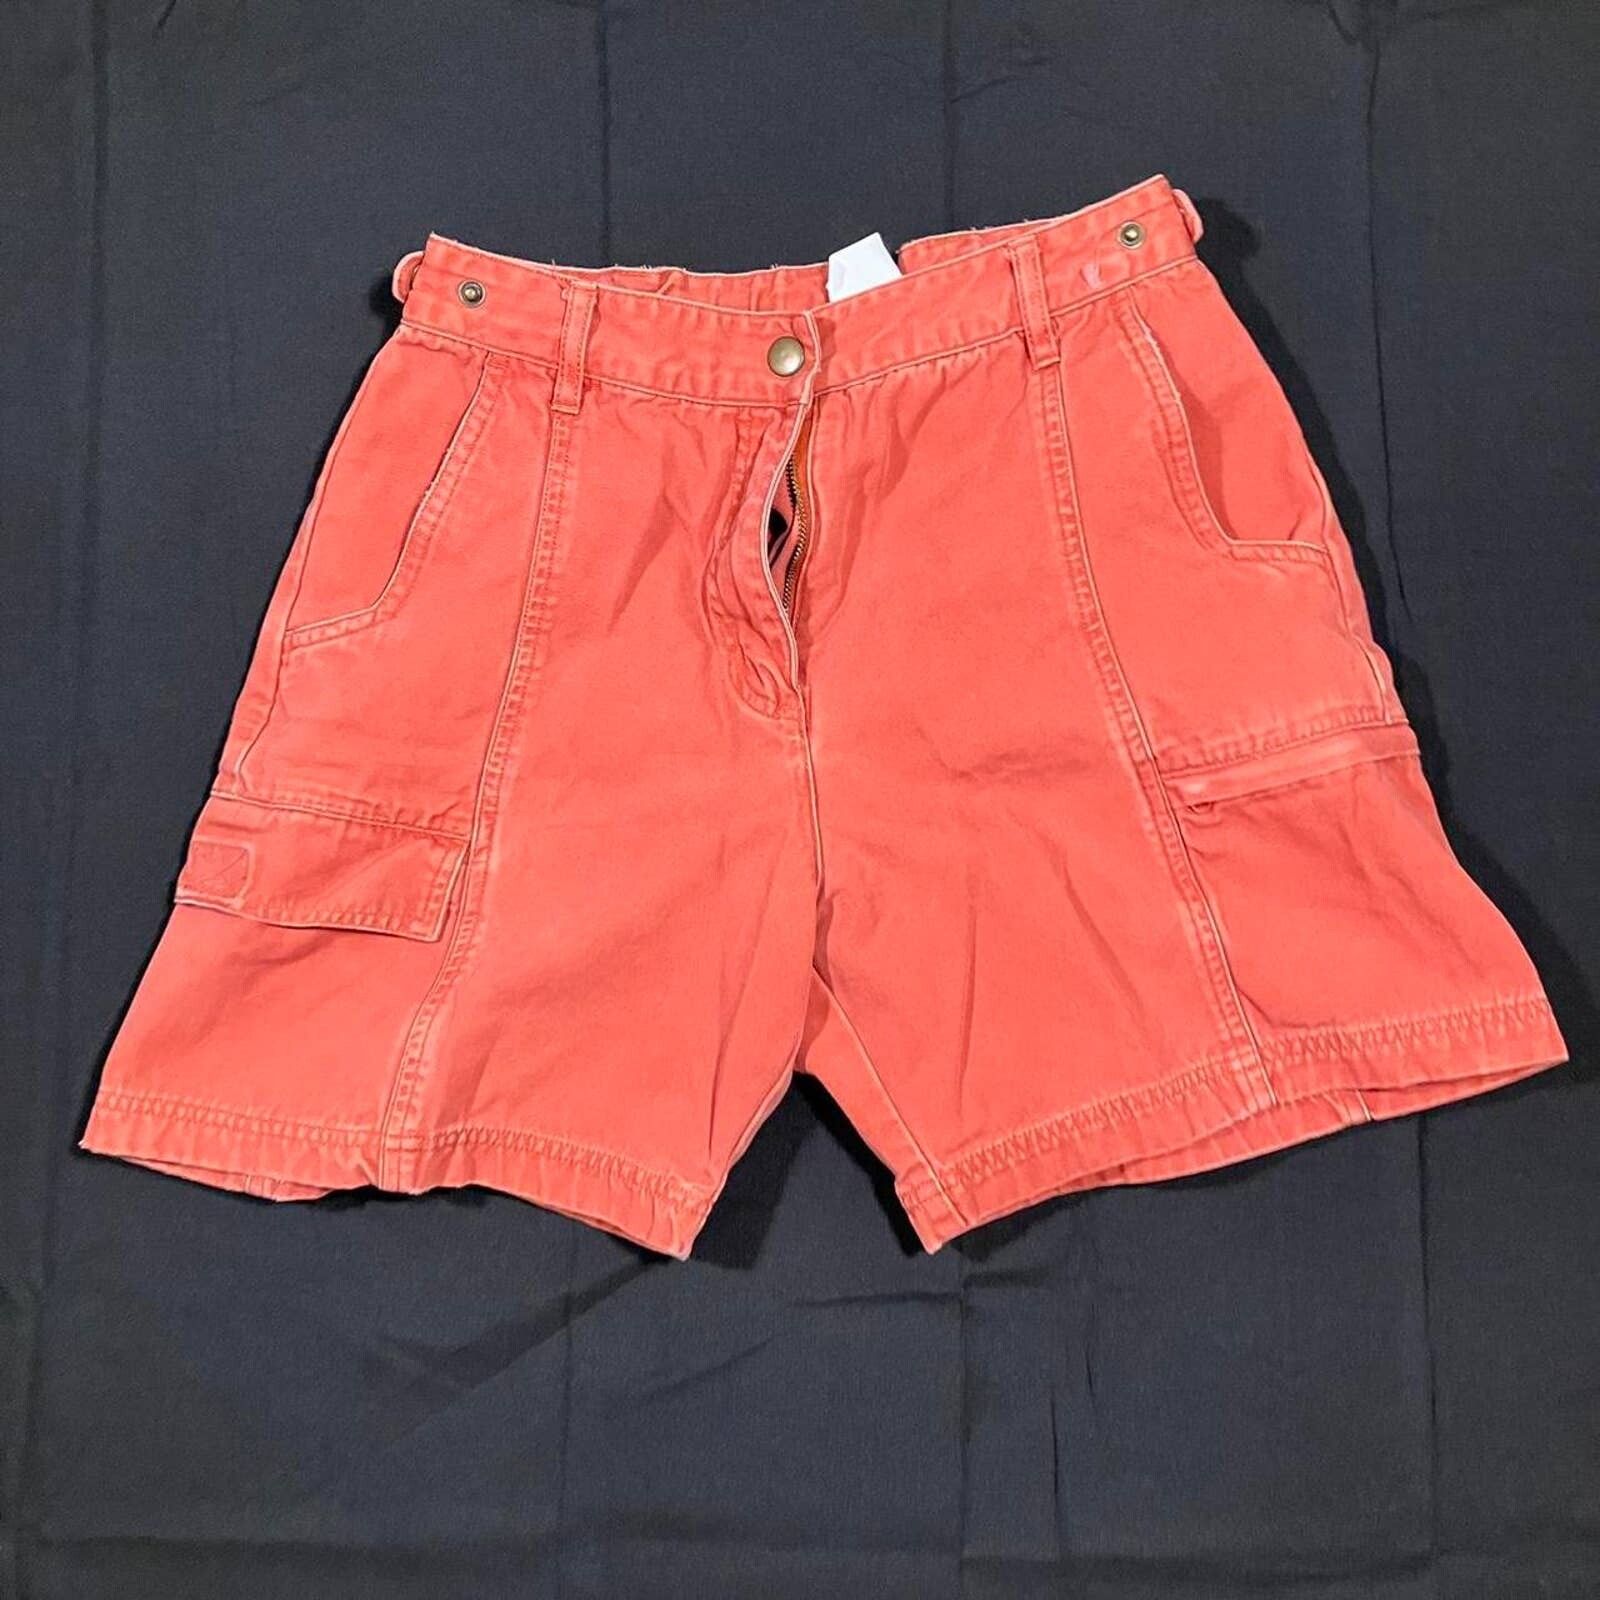 Woolrich Woolen Mills Woolrich Red Orange Canvas Cargo Shorts Size 30" / US 8 / IT 44 - 1 Preview